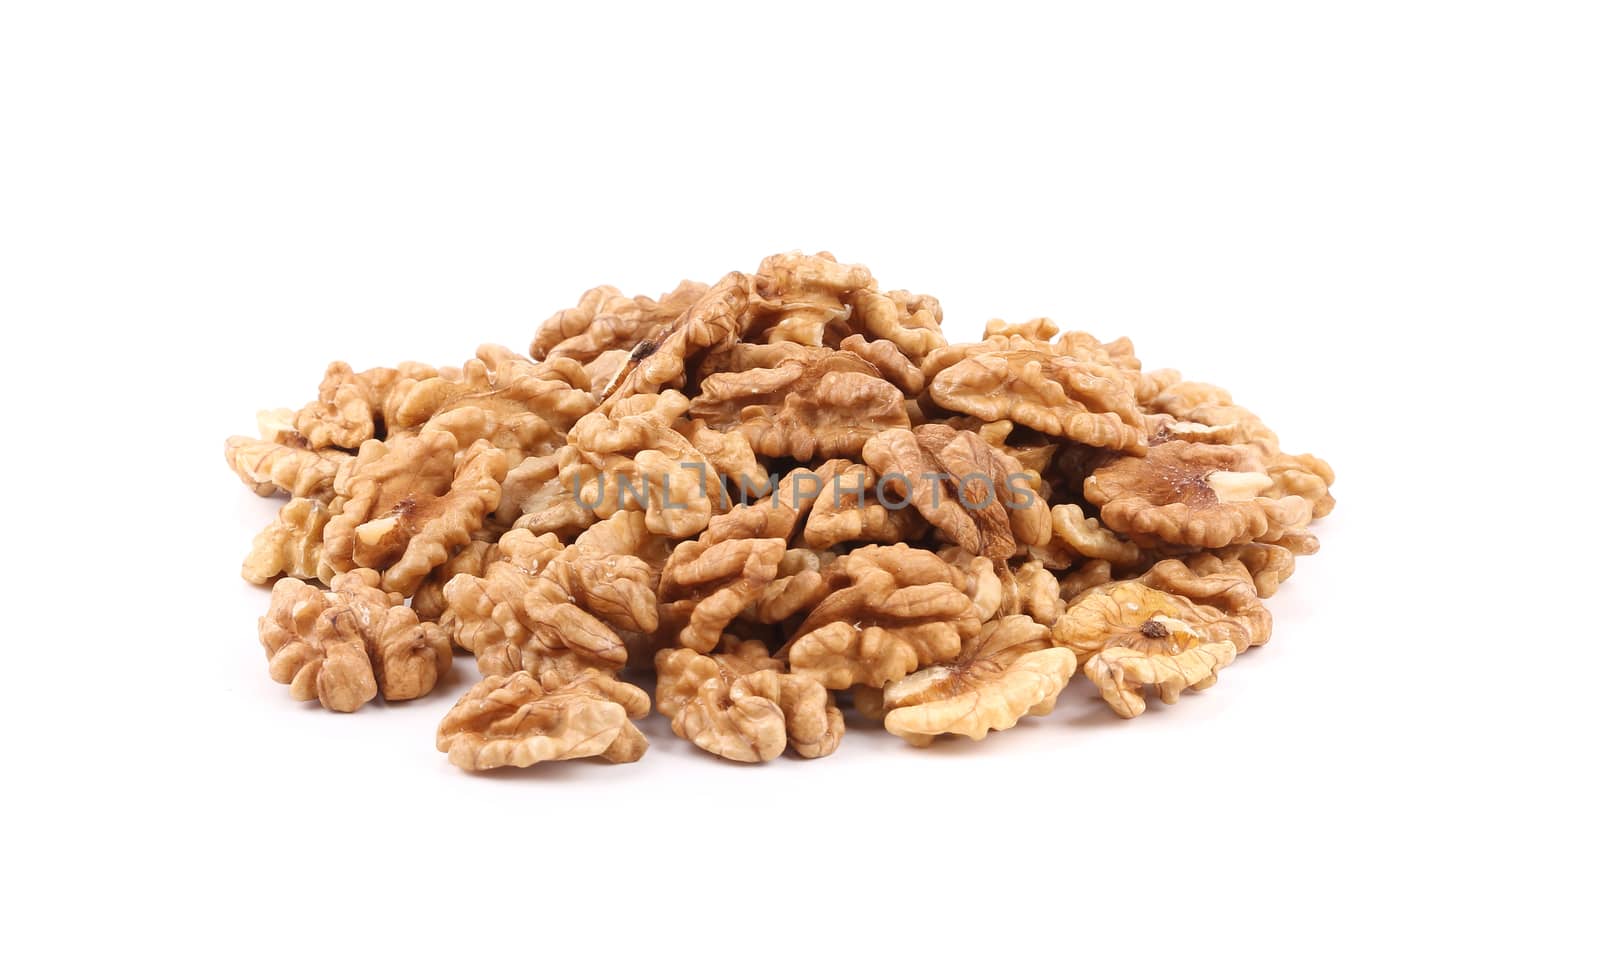 Bunch of walnuts. by indigolotos